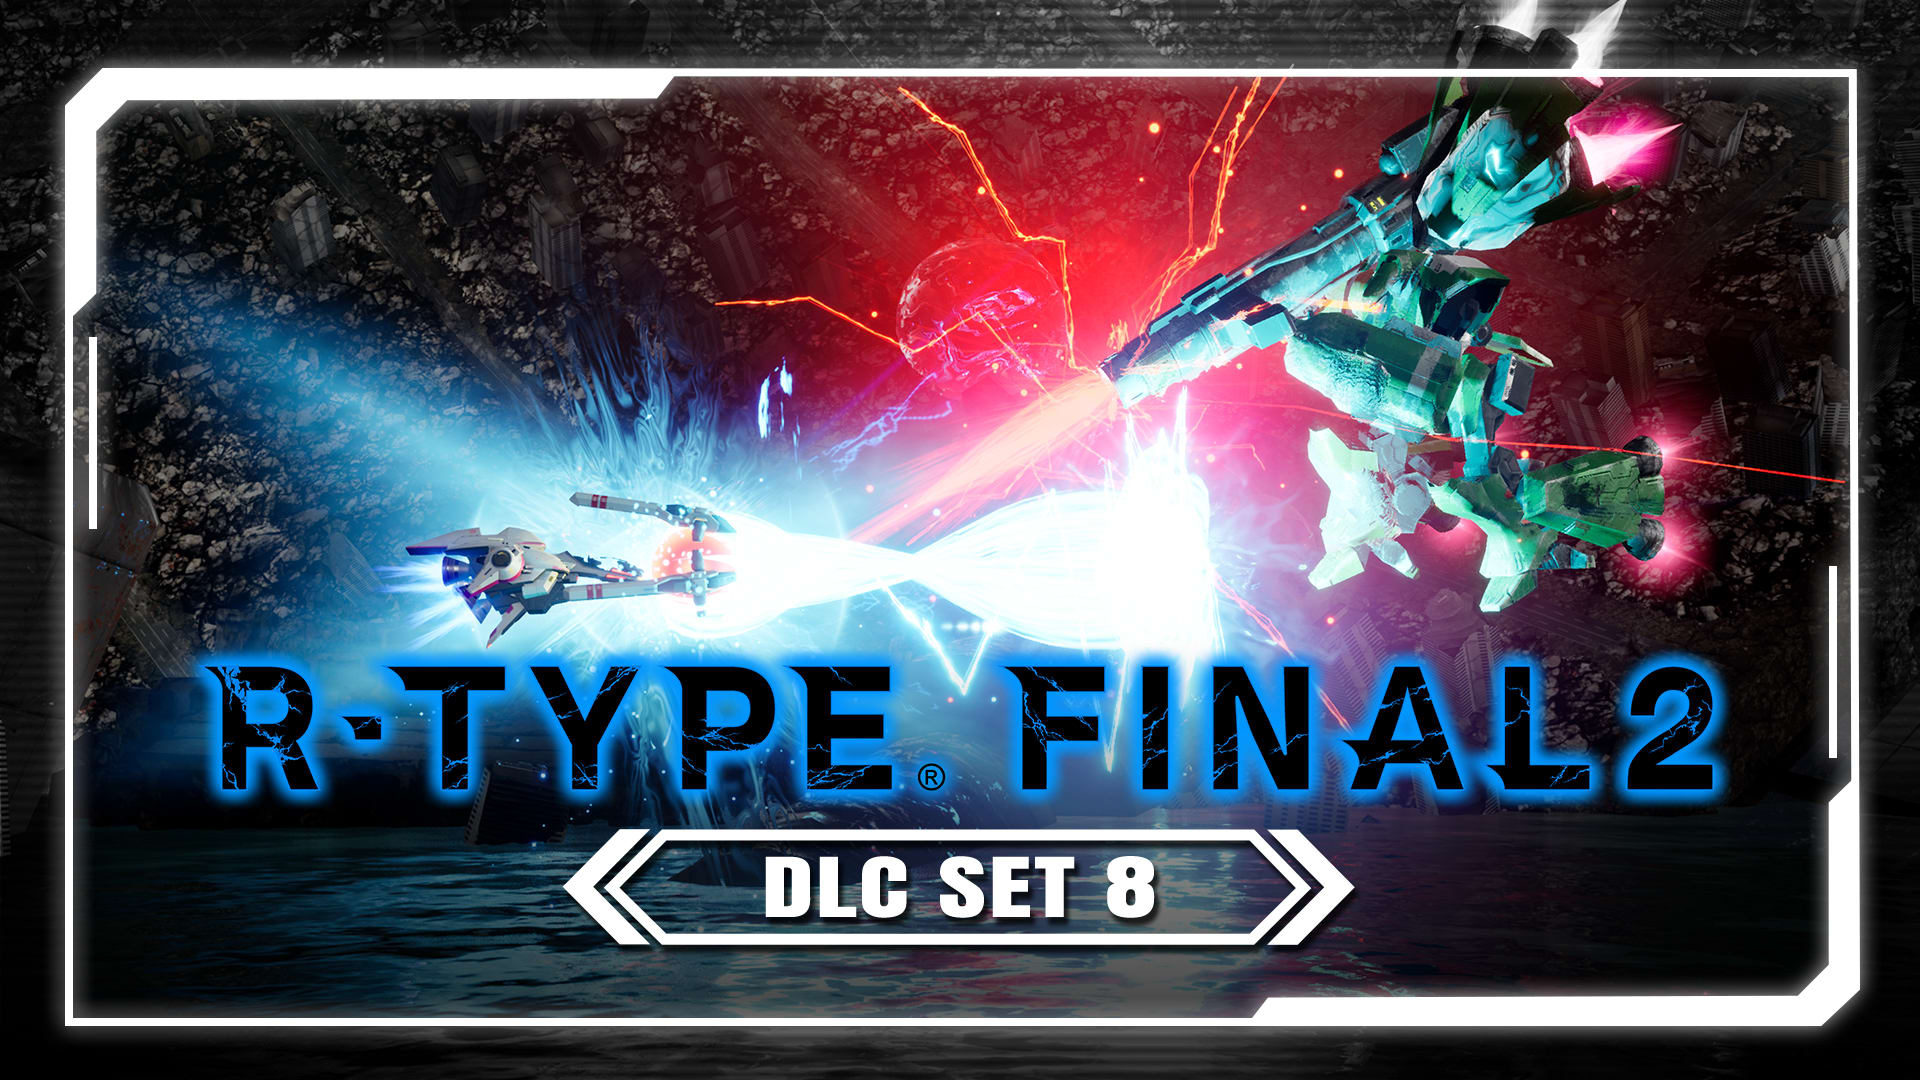 R-Type Final 2: DLC Set 8